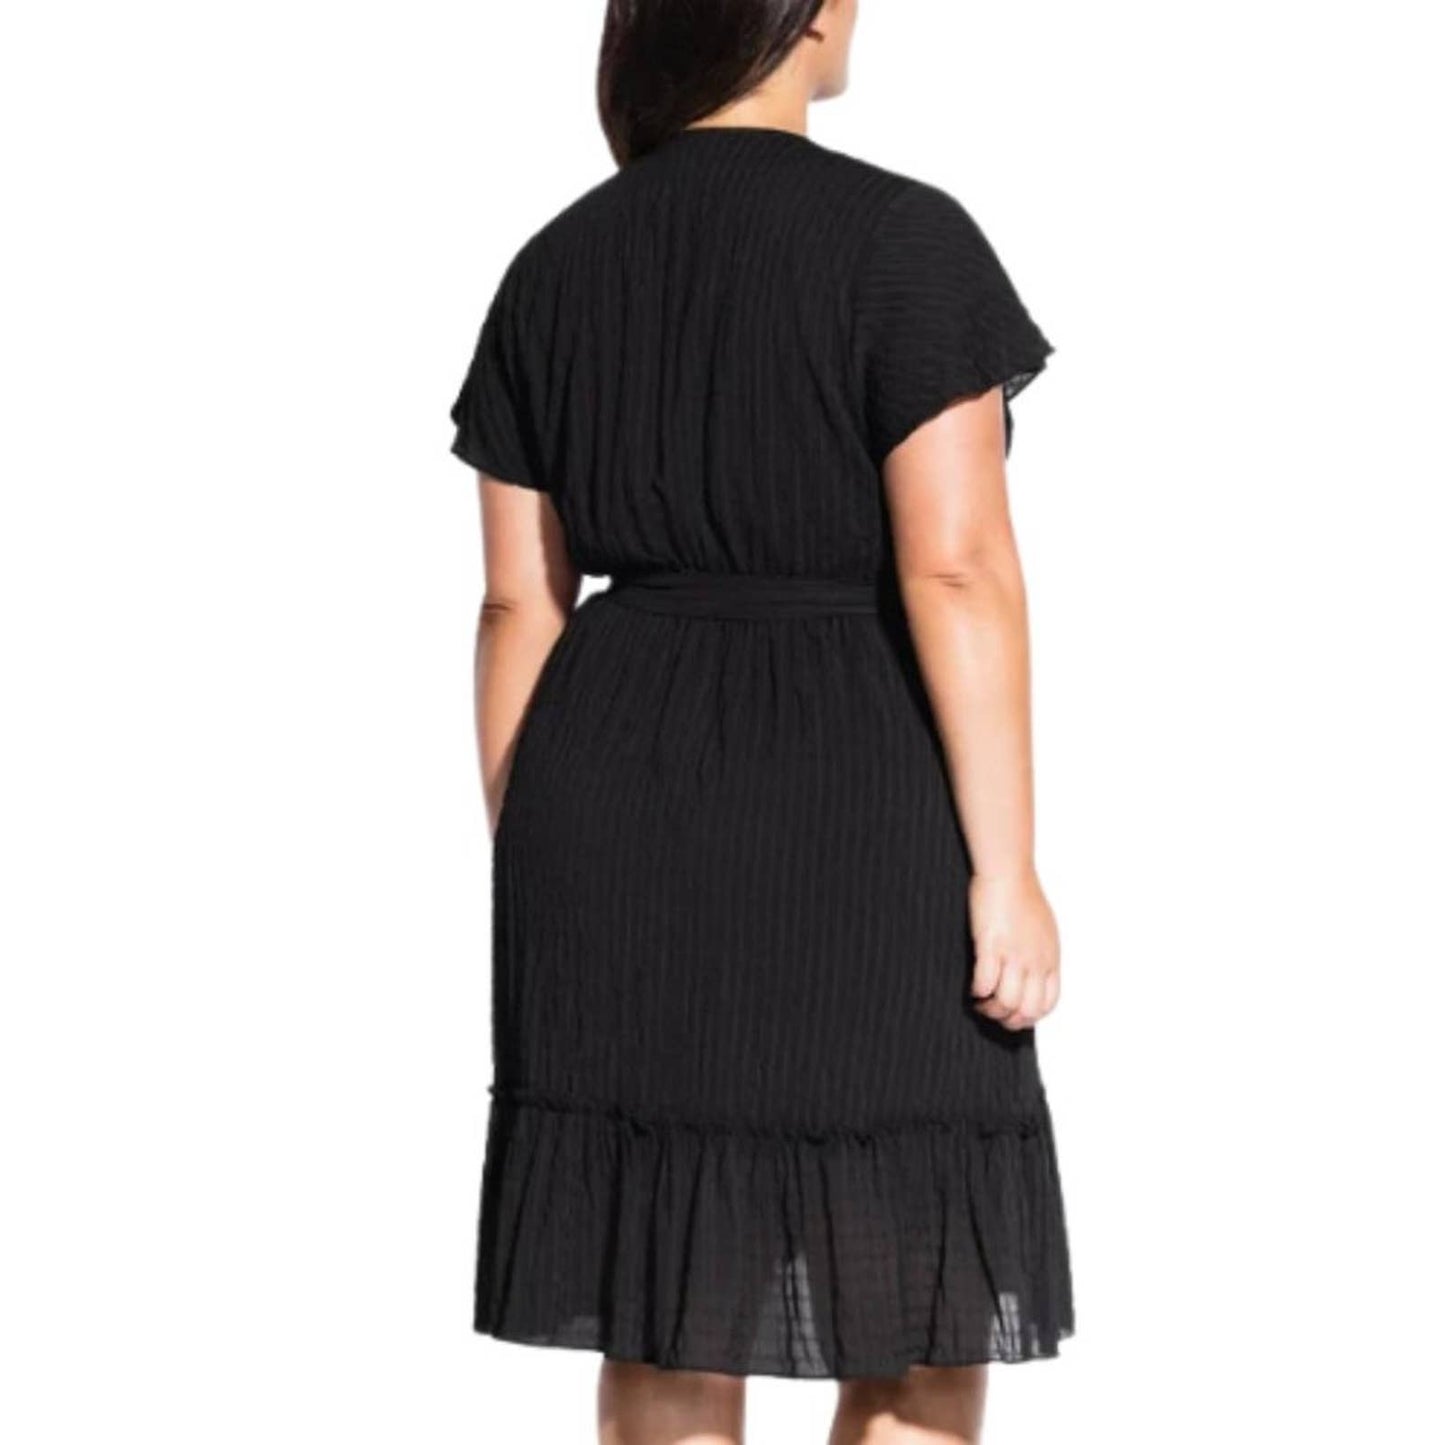 City Chic Women's Trendy Plus Size Striped Faux-Wrap Fit & Flare Dress Black XXL